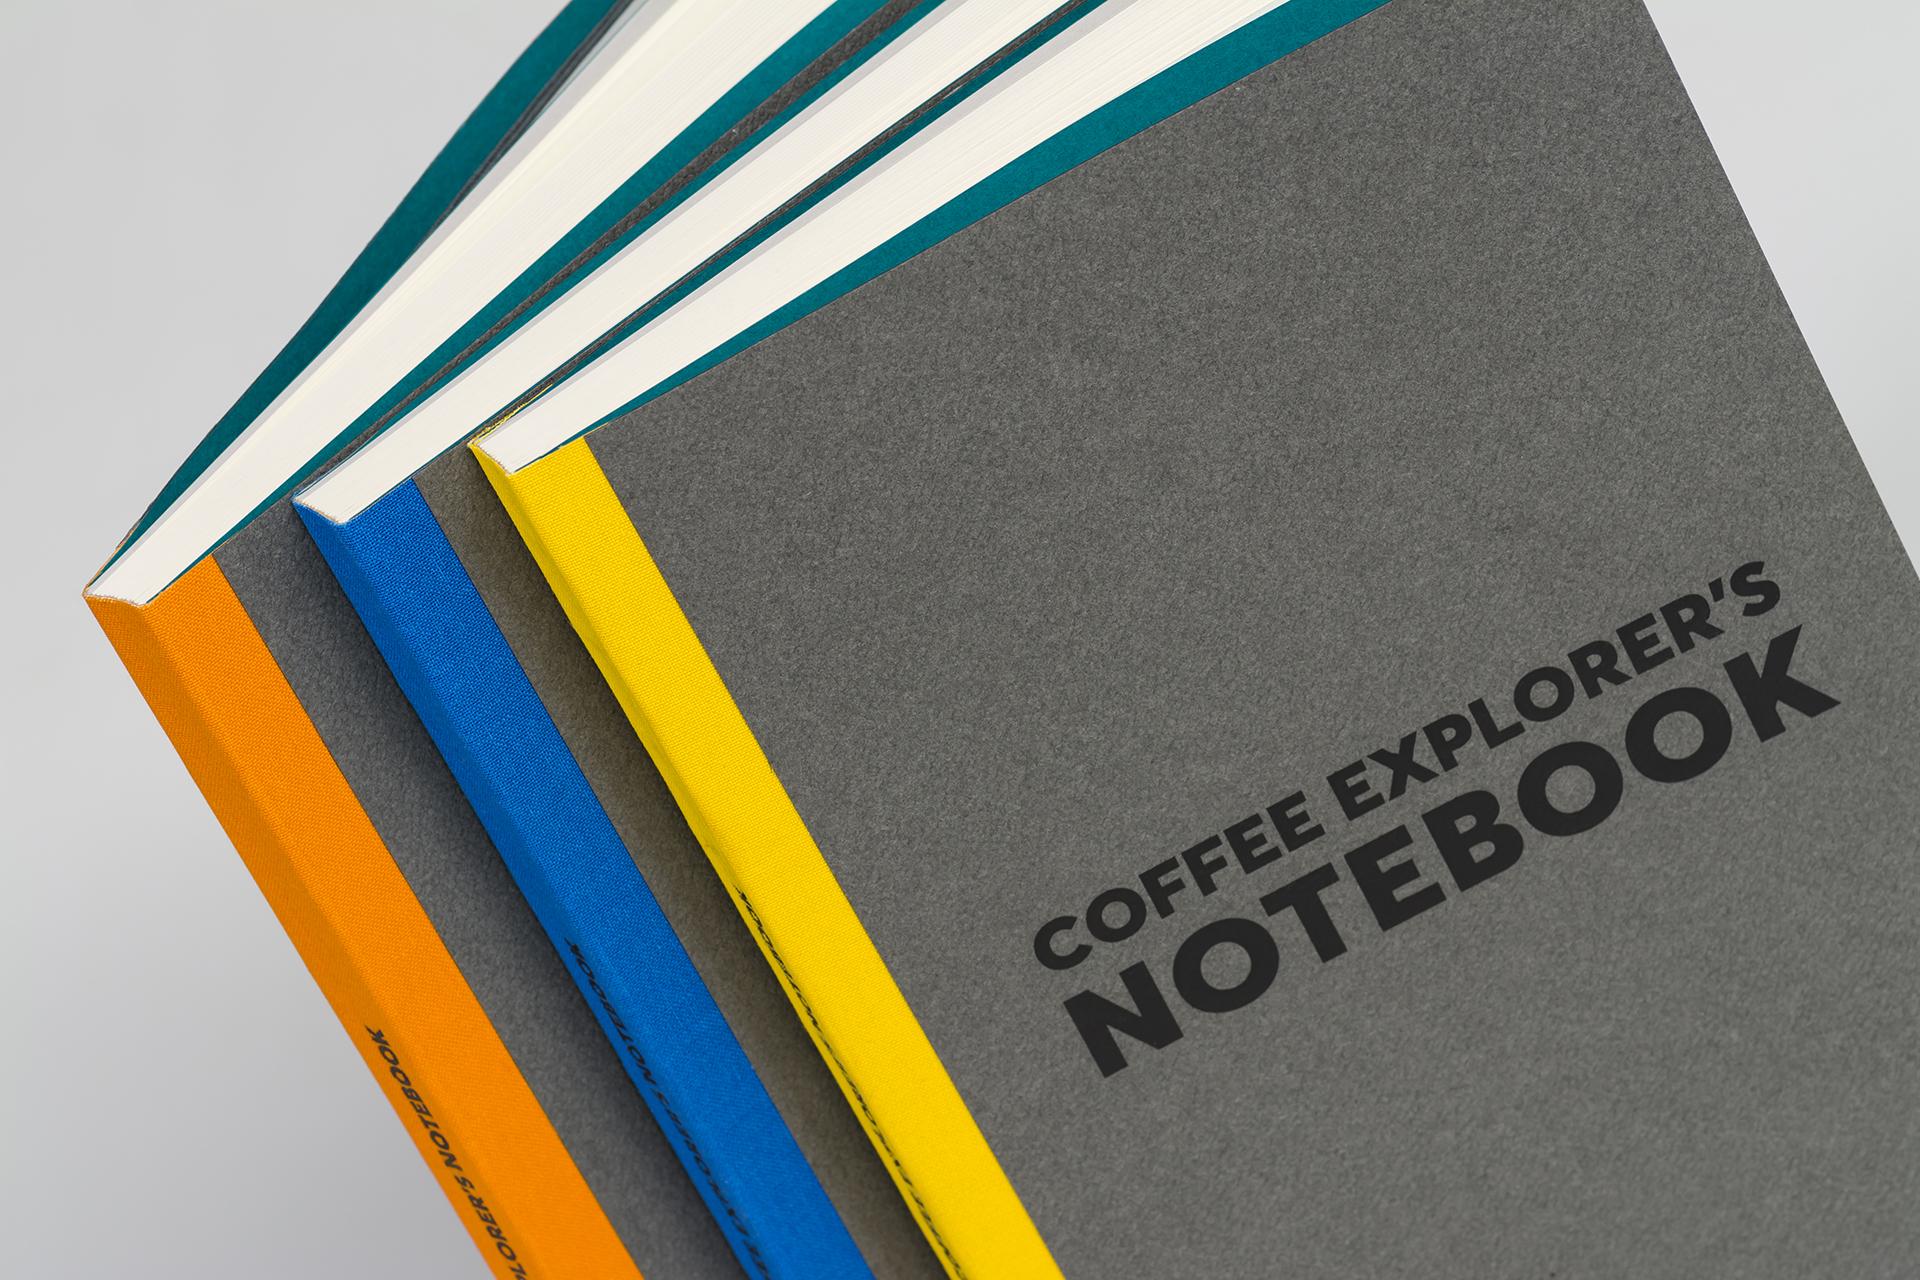 Coffee Island notebooks